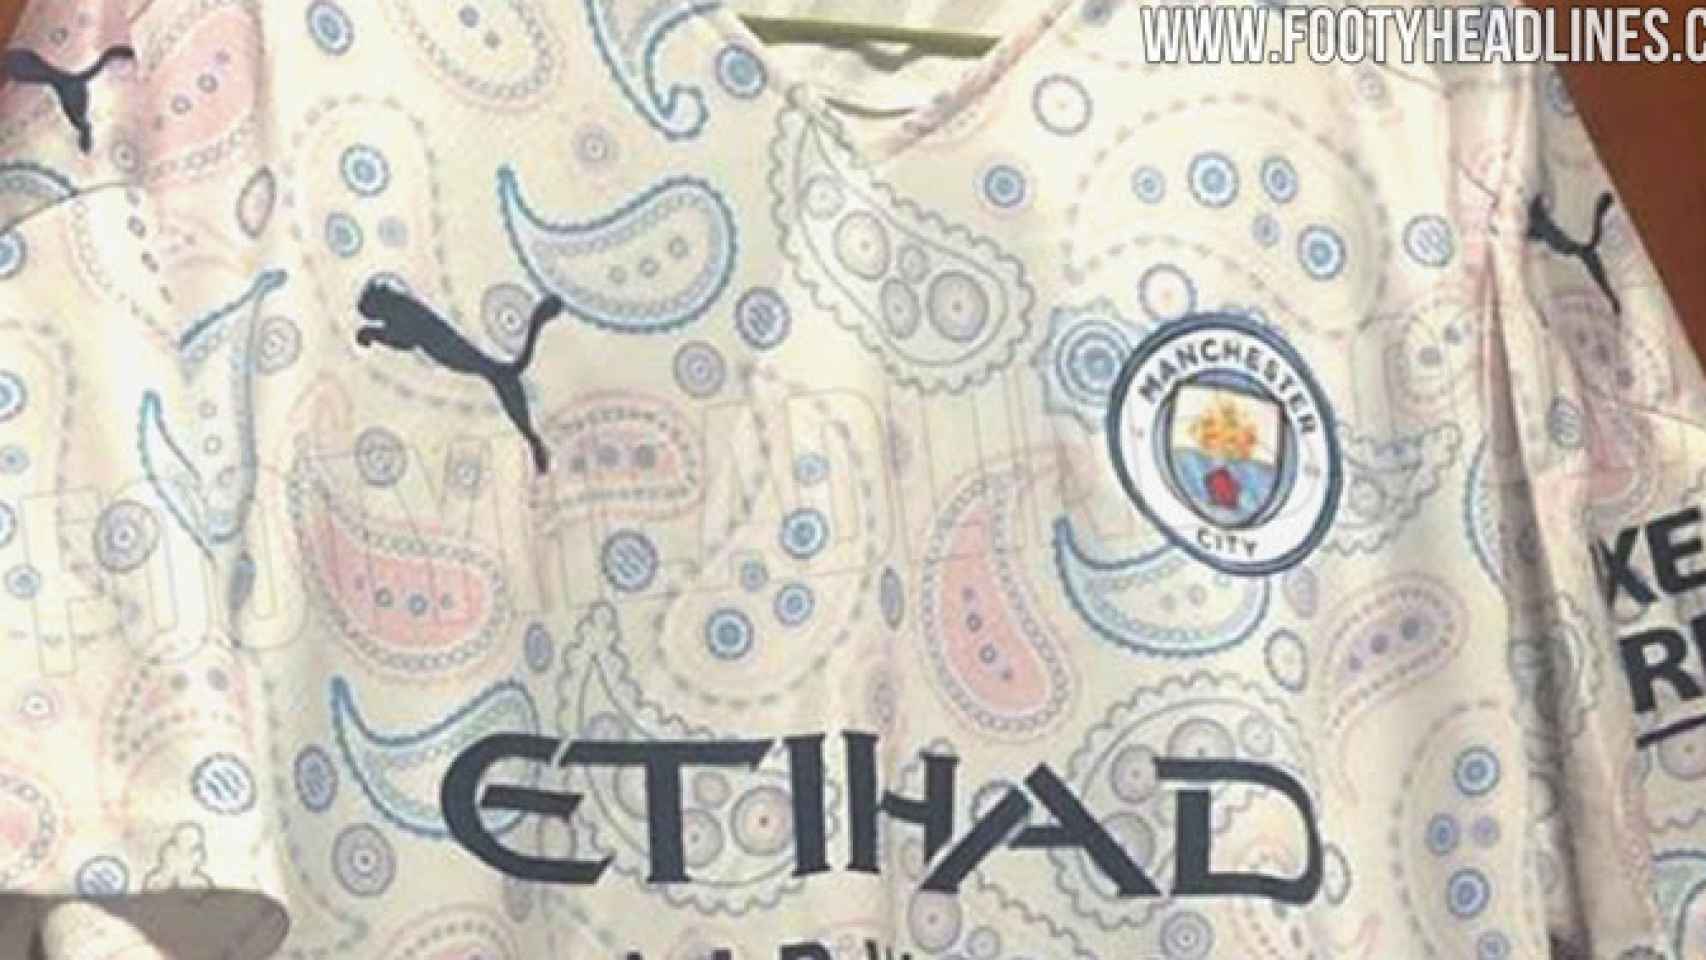 La posible tercera camiseta del Manchester City para la temporada 2020-2021